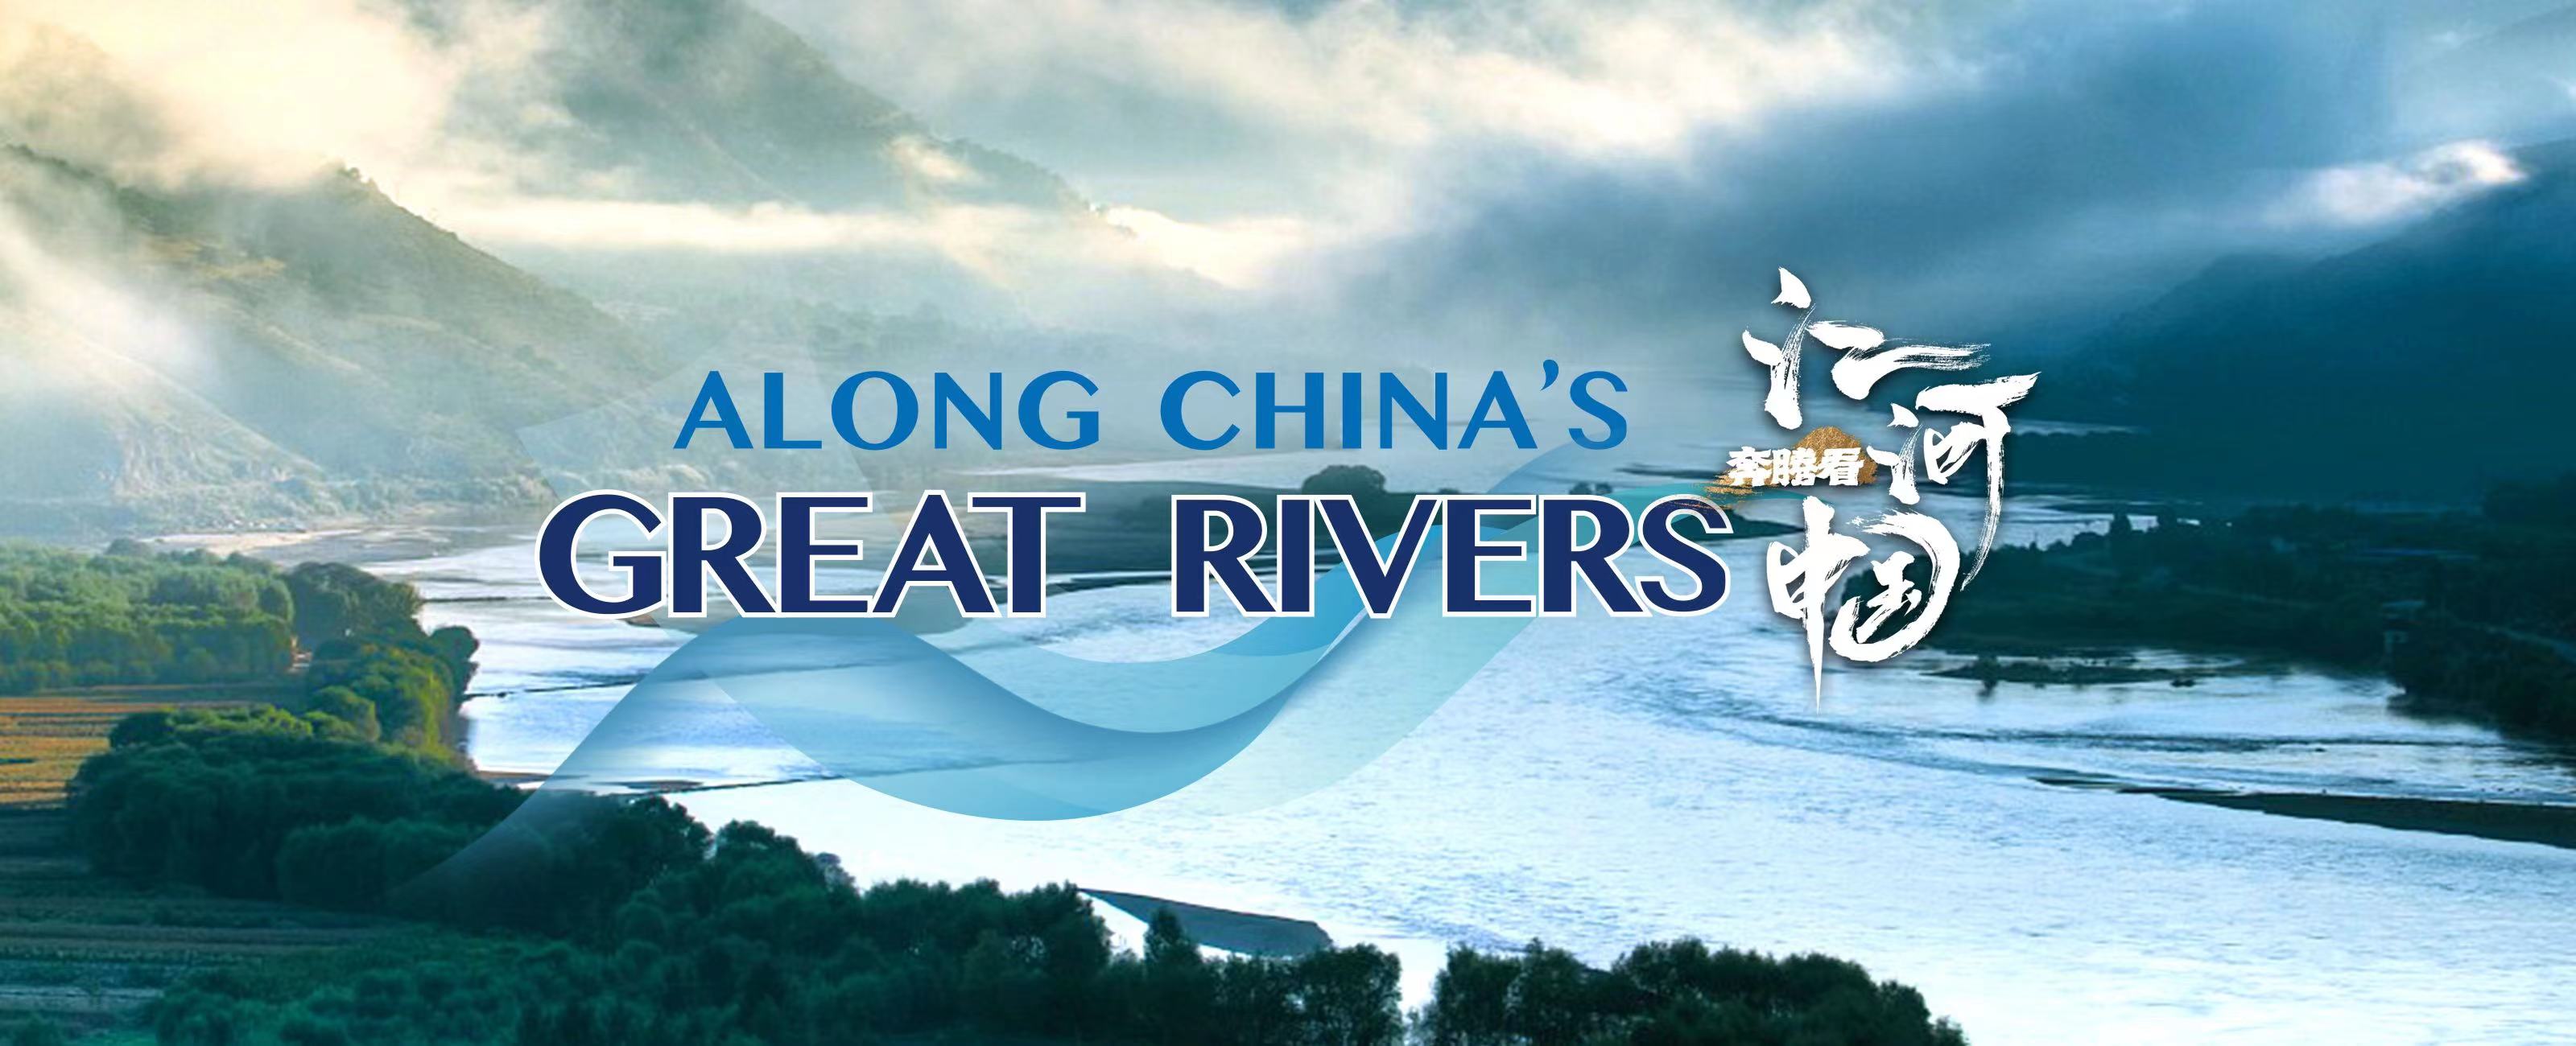 Along China's Great Rivers